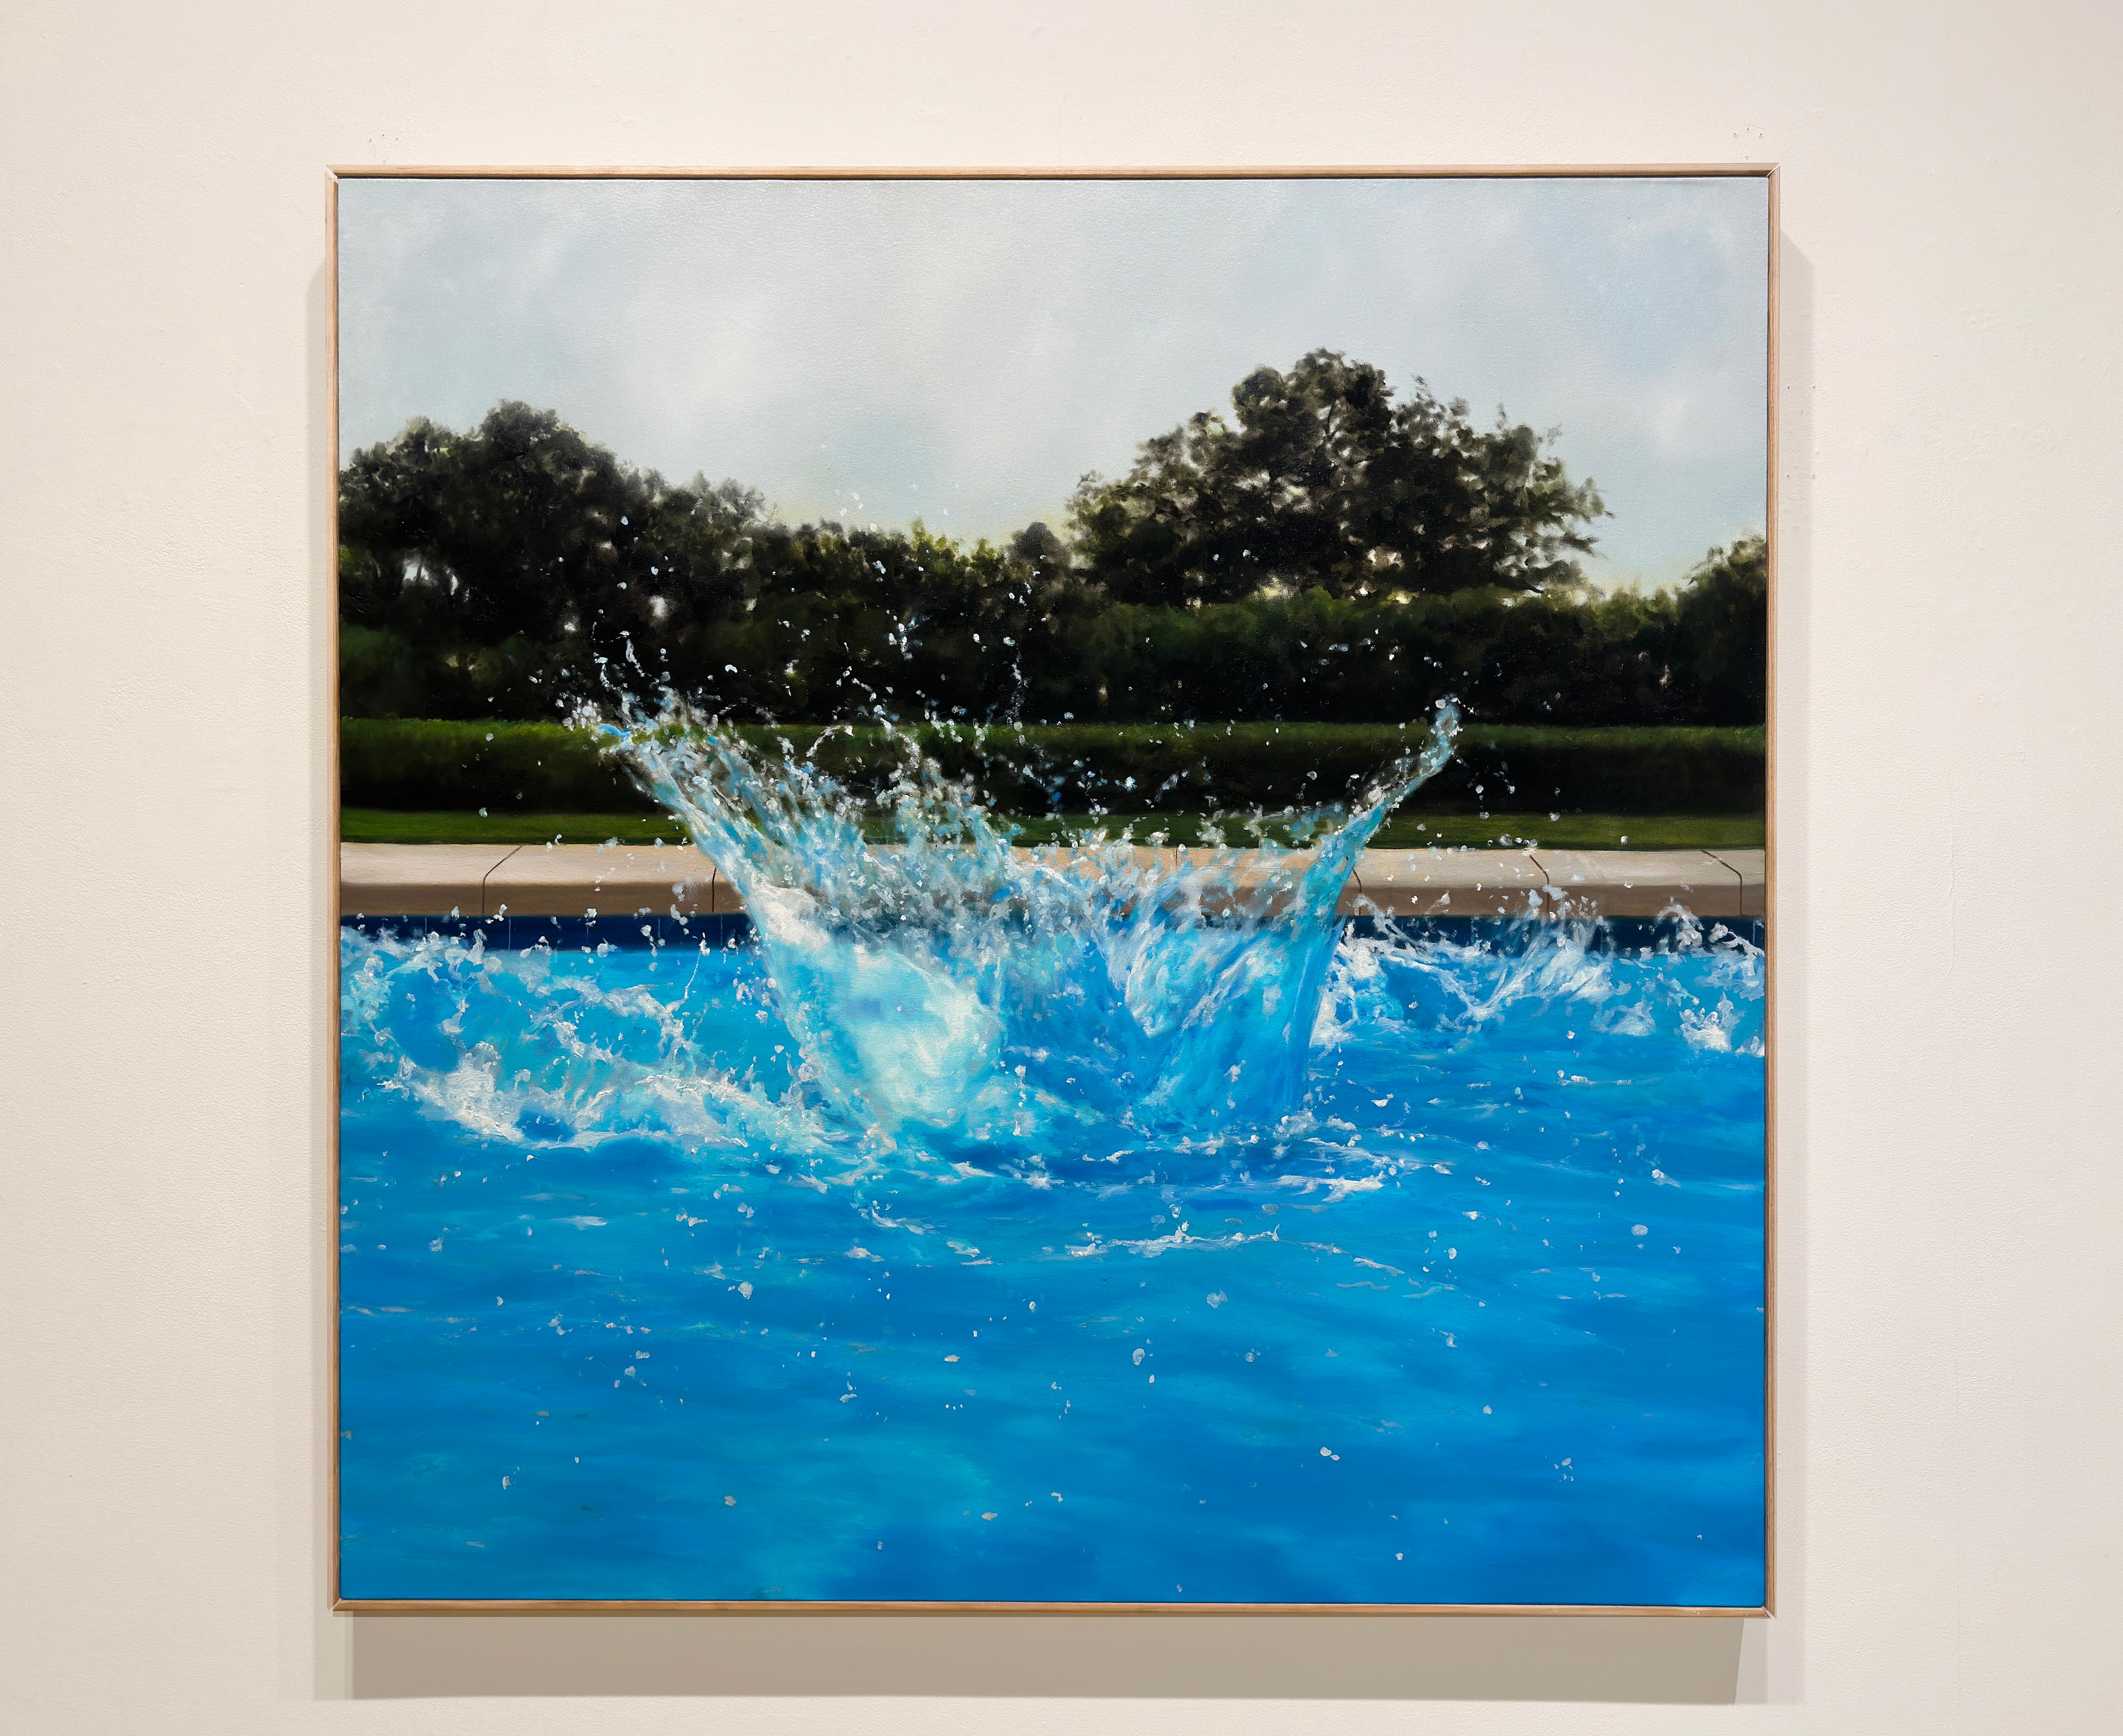 ECITO MORNING – Zeitgenössischer Realismus / Pool-Wasserszene / California Vibe – Painting von Eric Zener